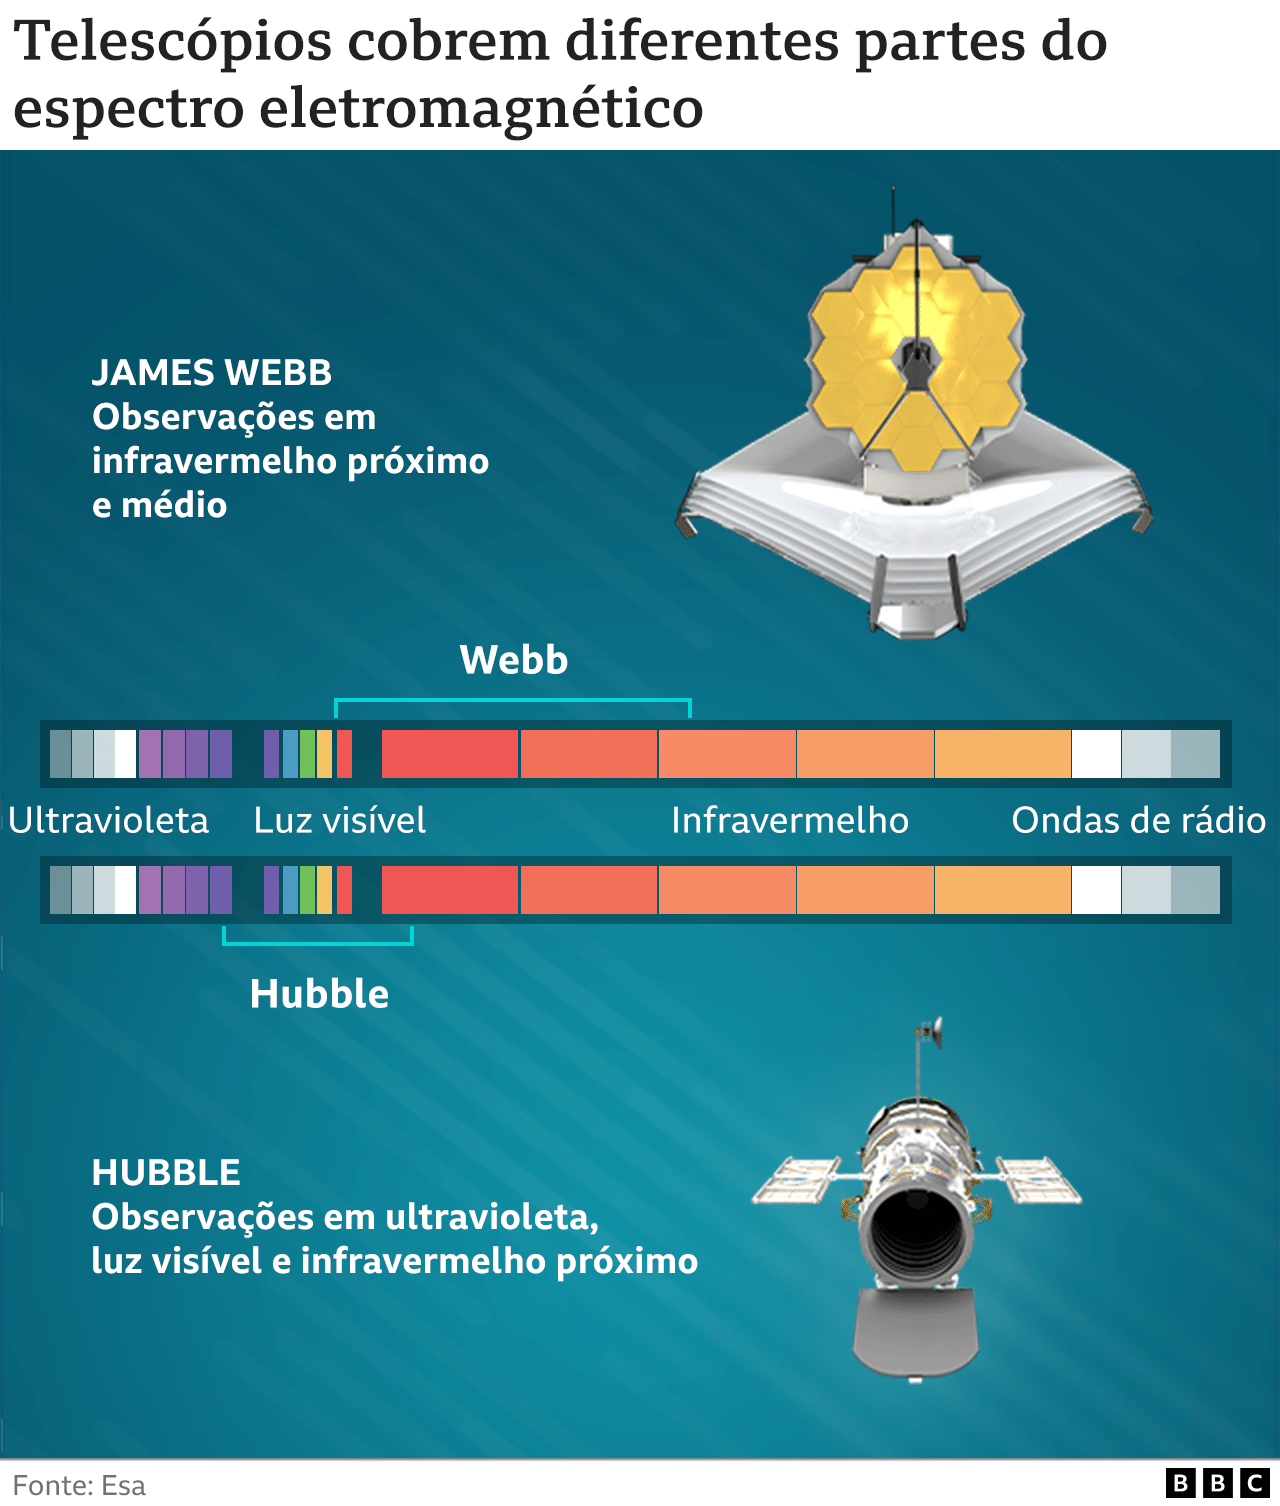 Infográfico mostra diferentes partes do espectro eletromagnético cobertas pelo Hubble e James Webb